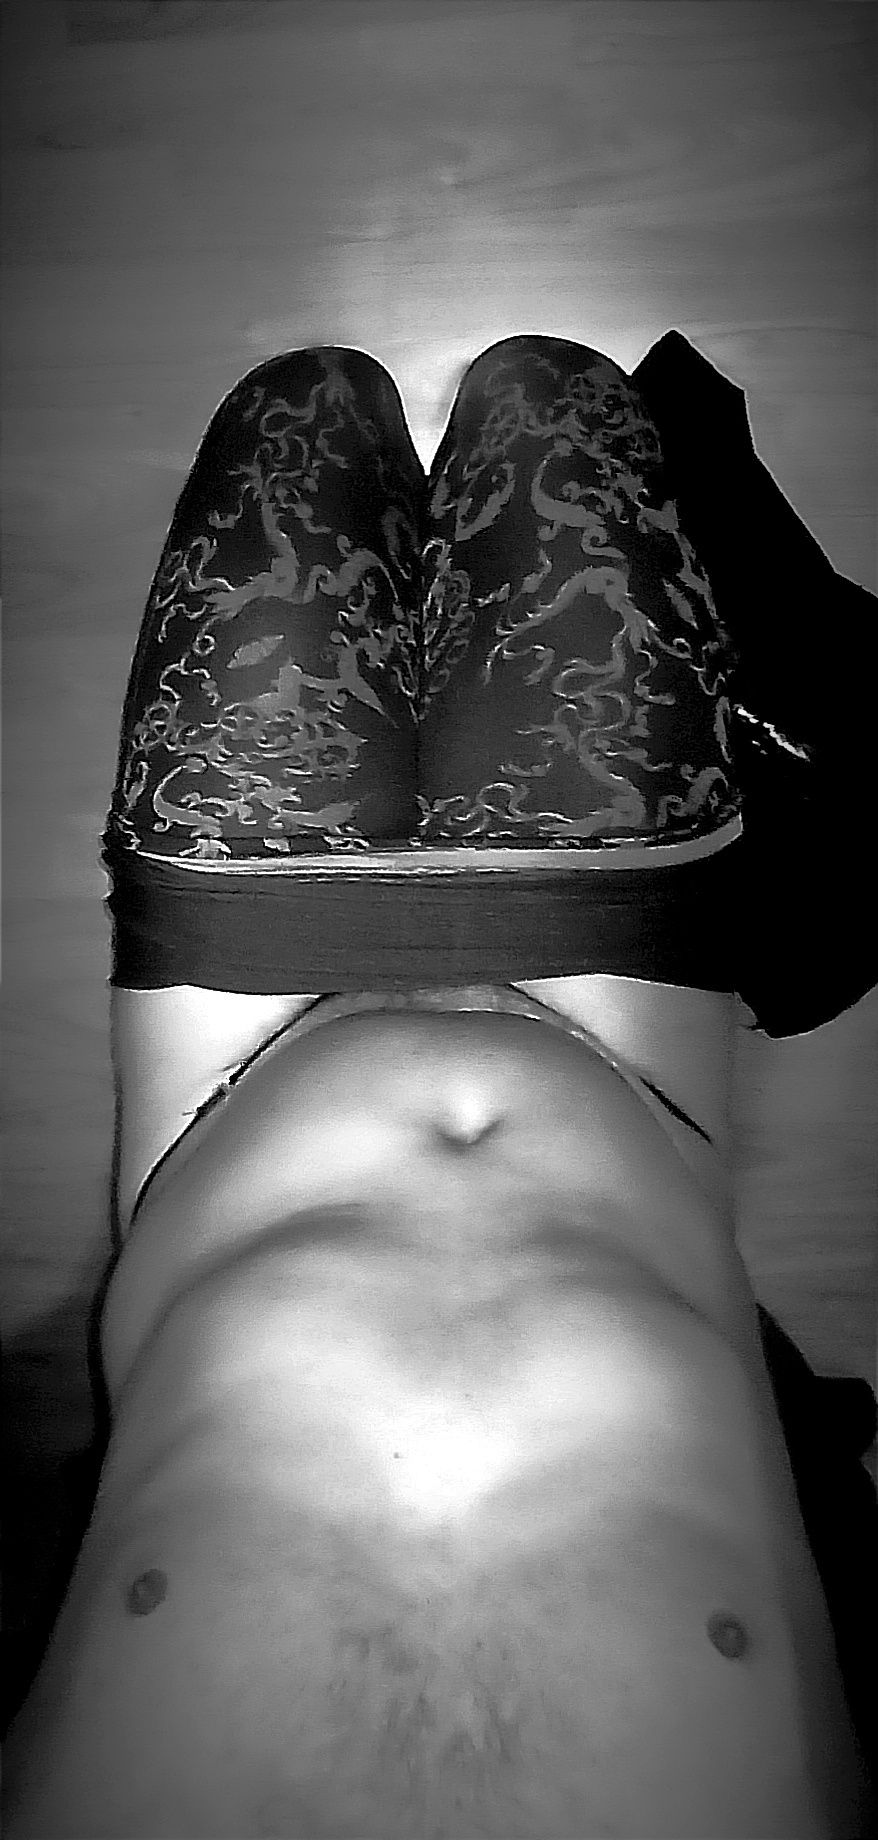 sharp anal in women&amp;#039;s underwear, a lovely slut #6